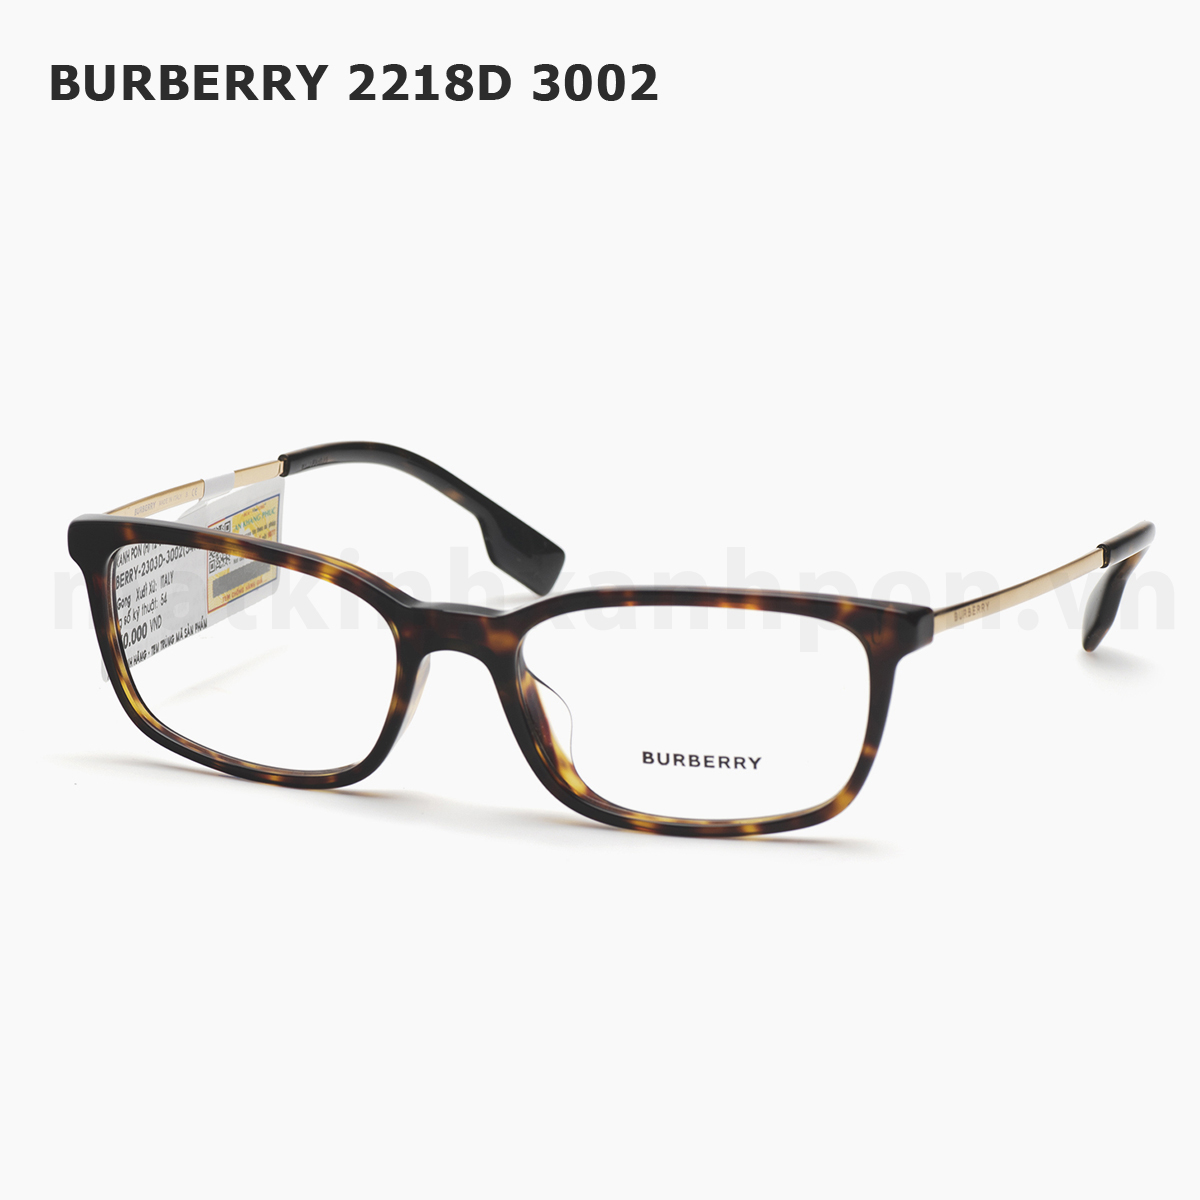 Burberry 2218D 3002